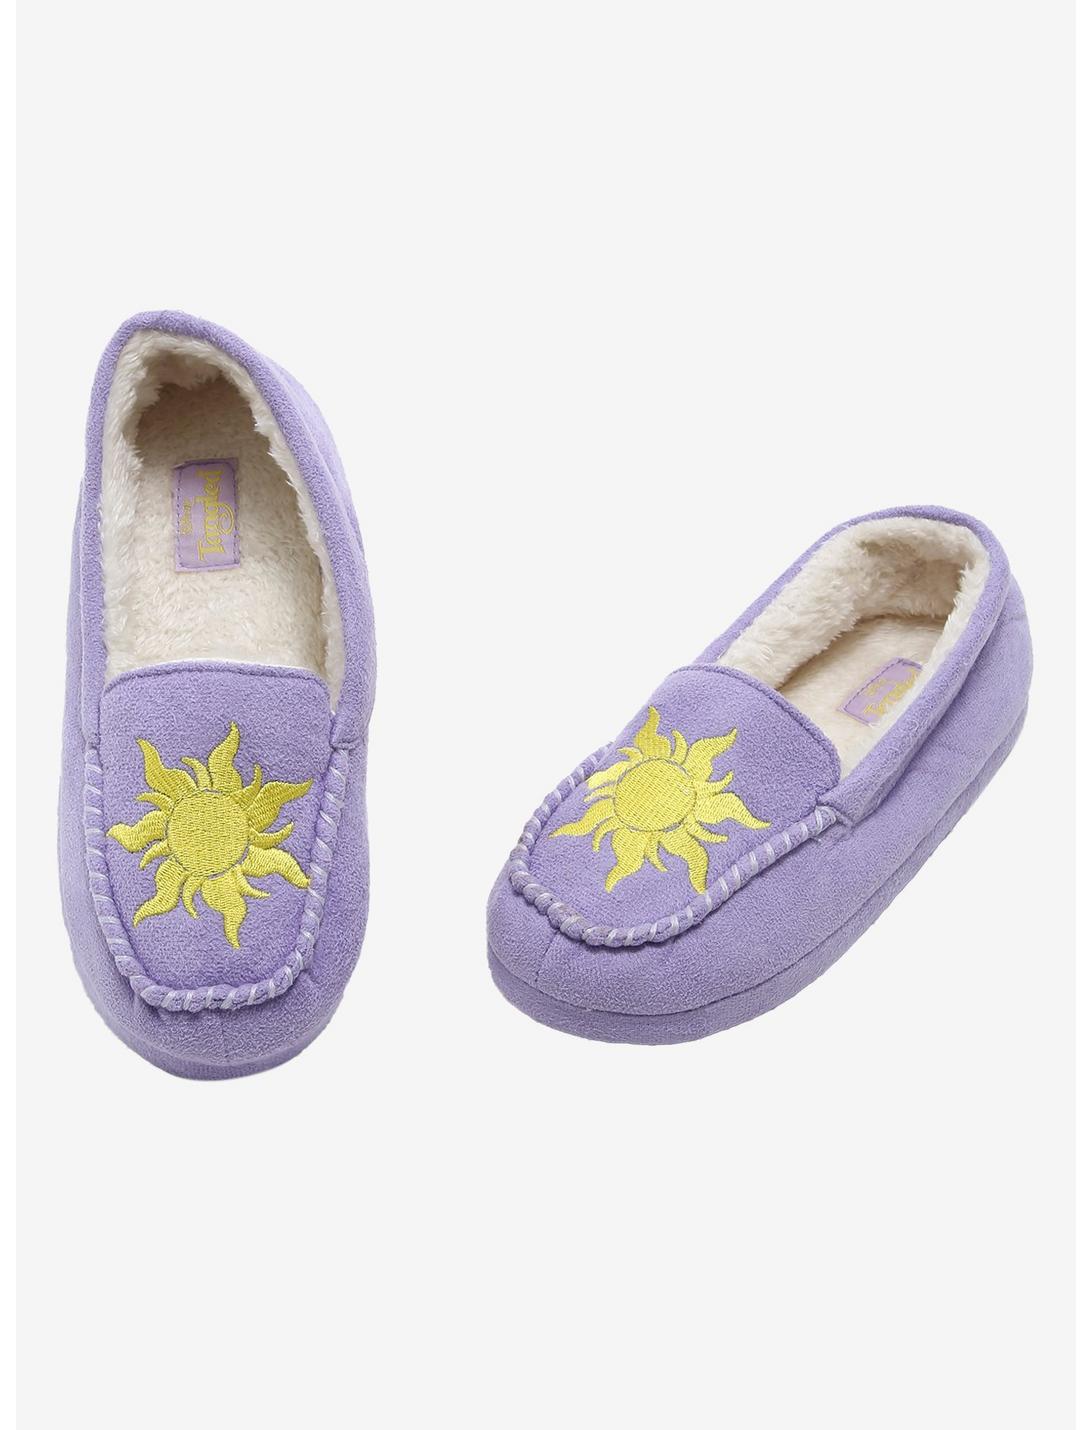 Disney Tangled Sun Emblem Moccasin Slippers, MULTI, hi-res